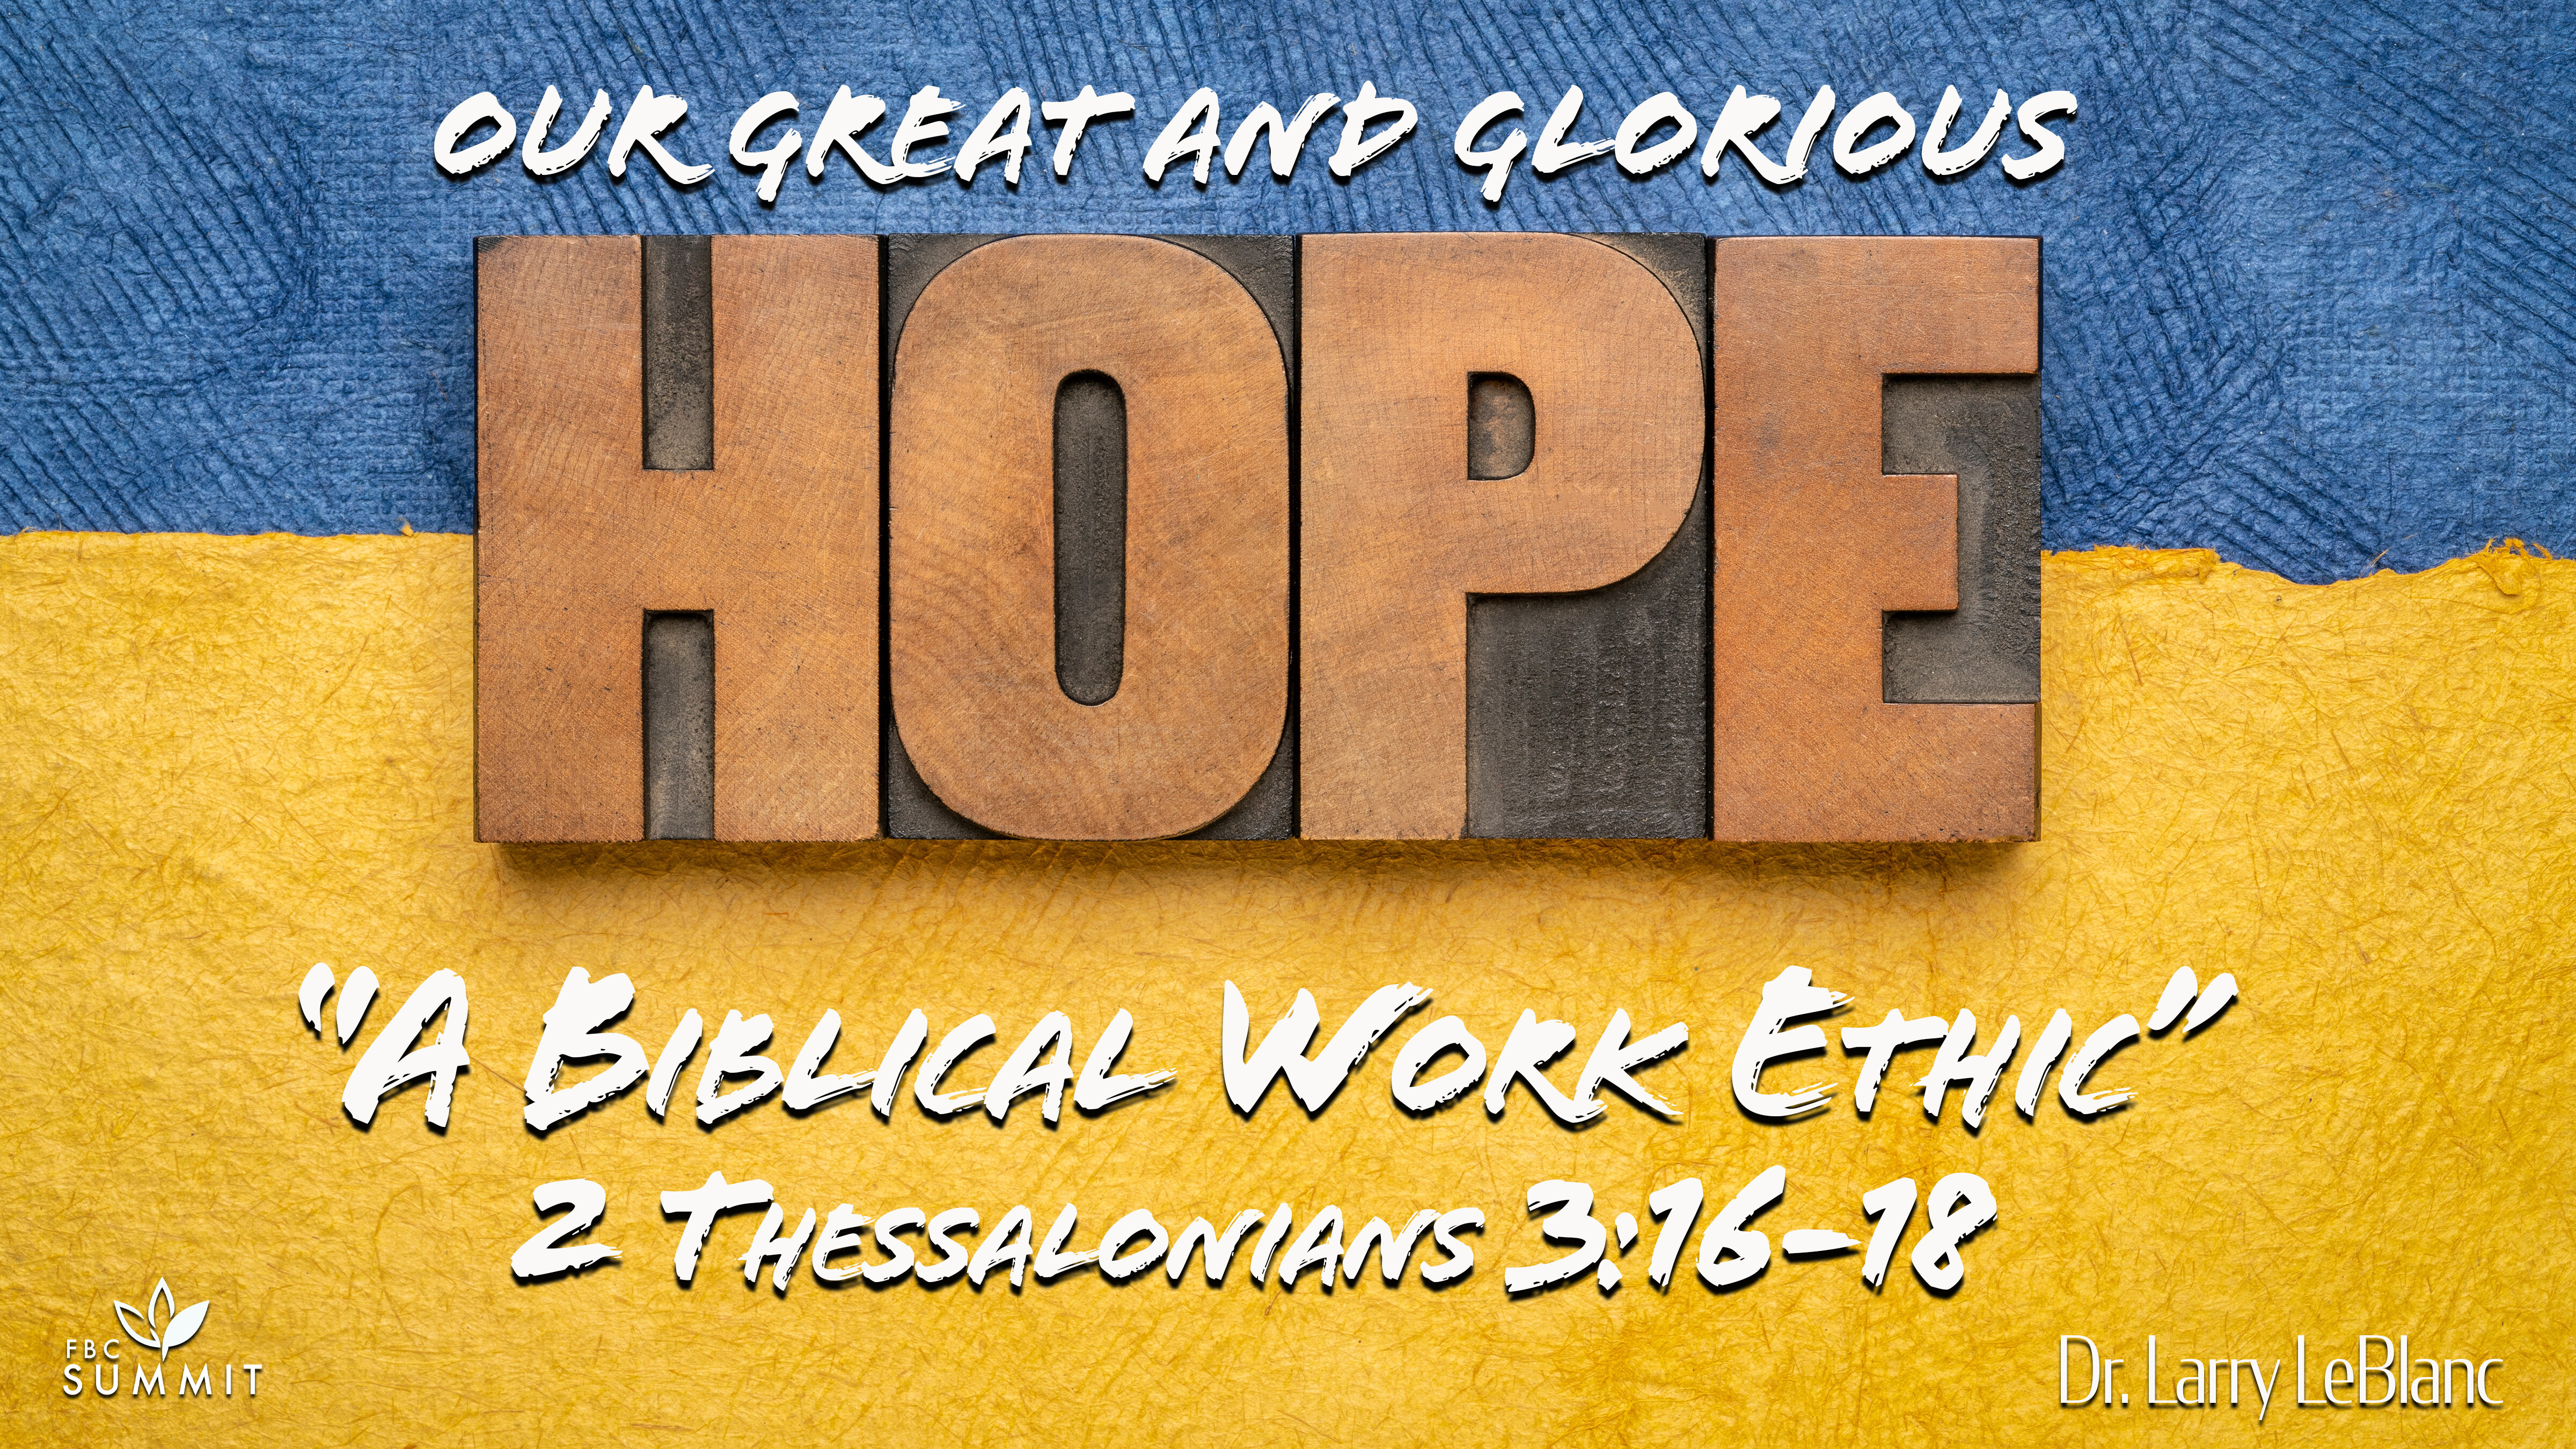 "A Biblical Work Ethic" 2 Thessalonians 3:6-18 // Dr. Larry LeBlanc